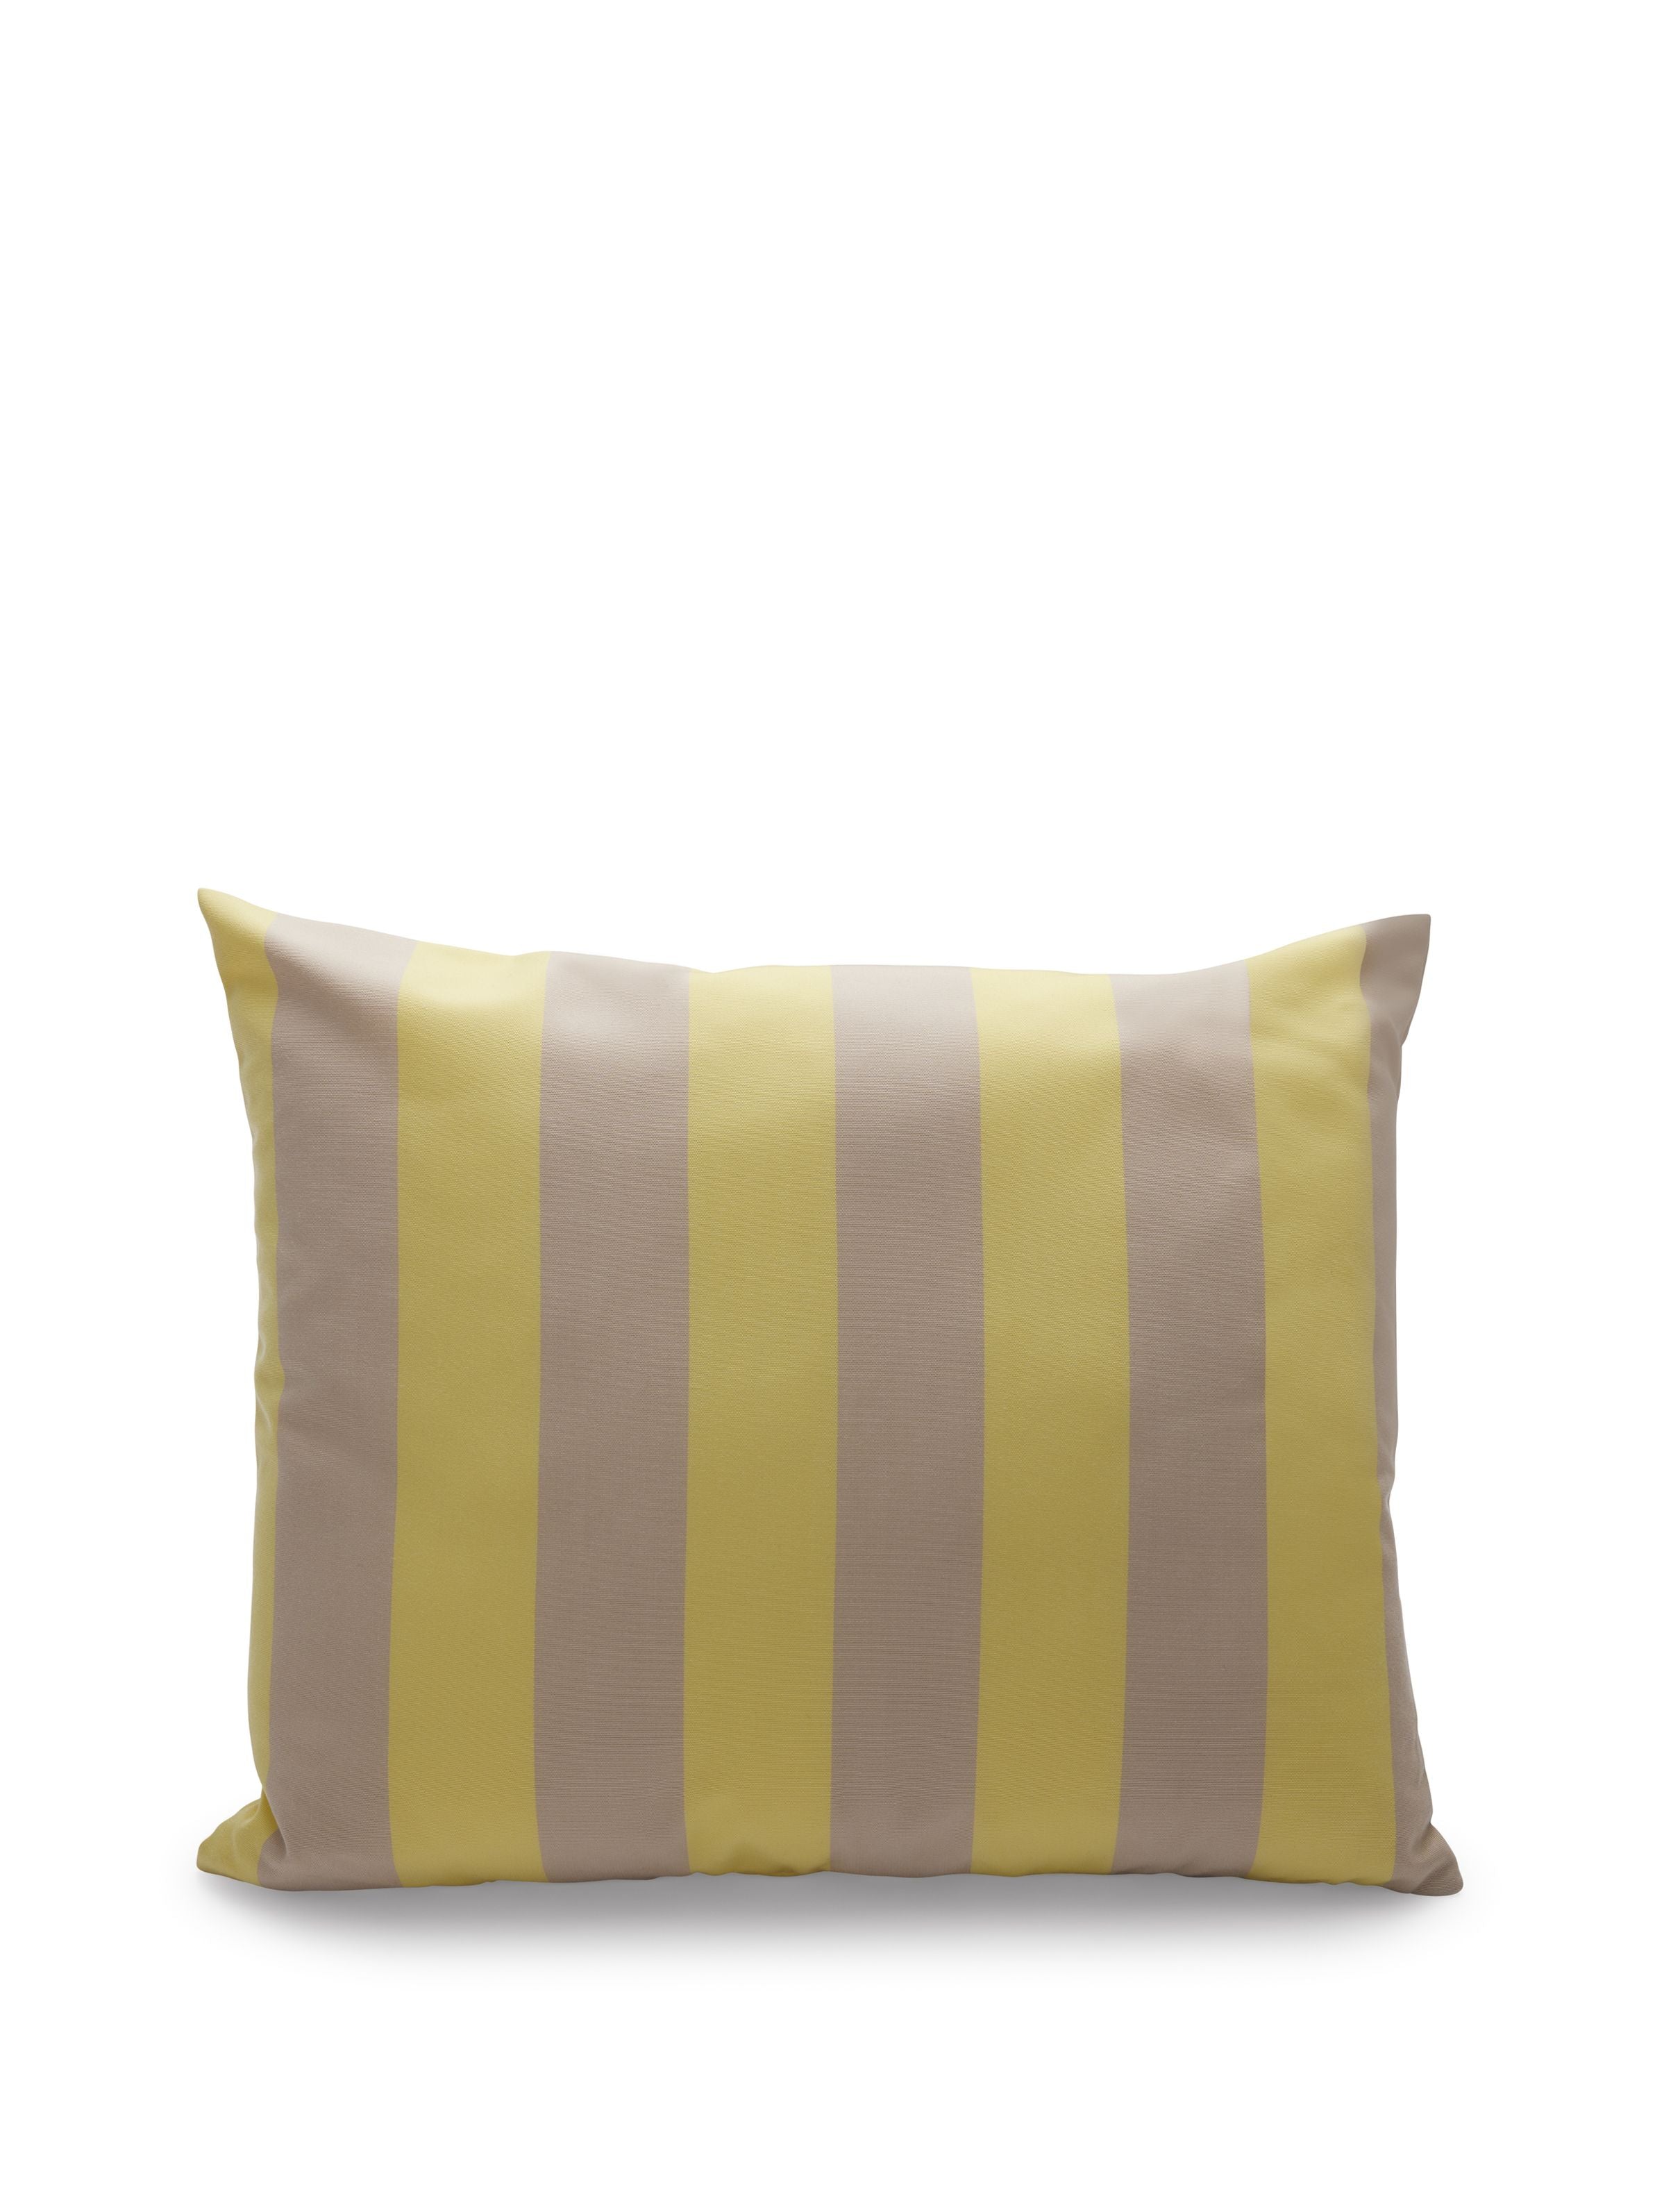 Skagerak Barriere Pillow 60x50 Cm, Lemon/Sand Stripe